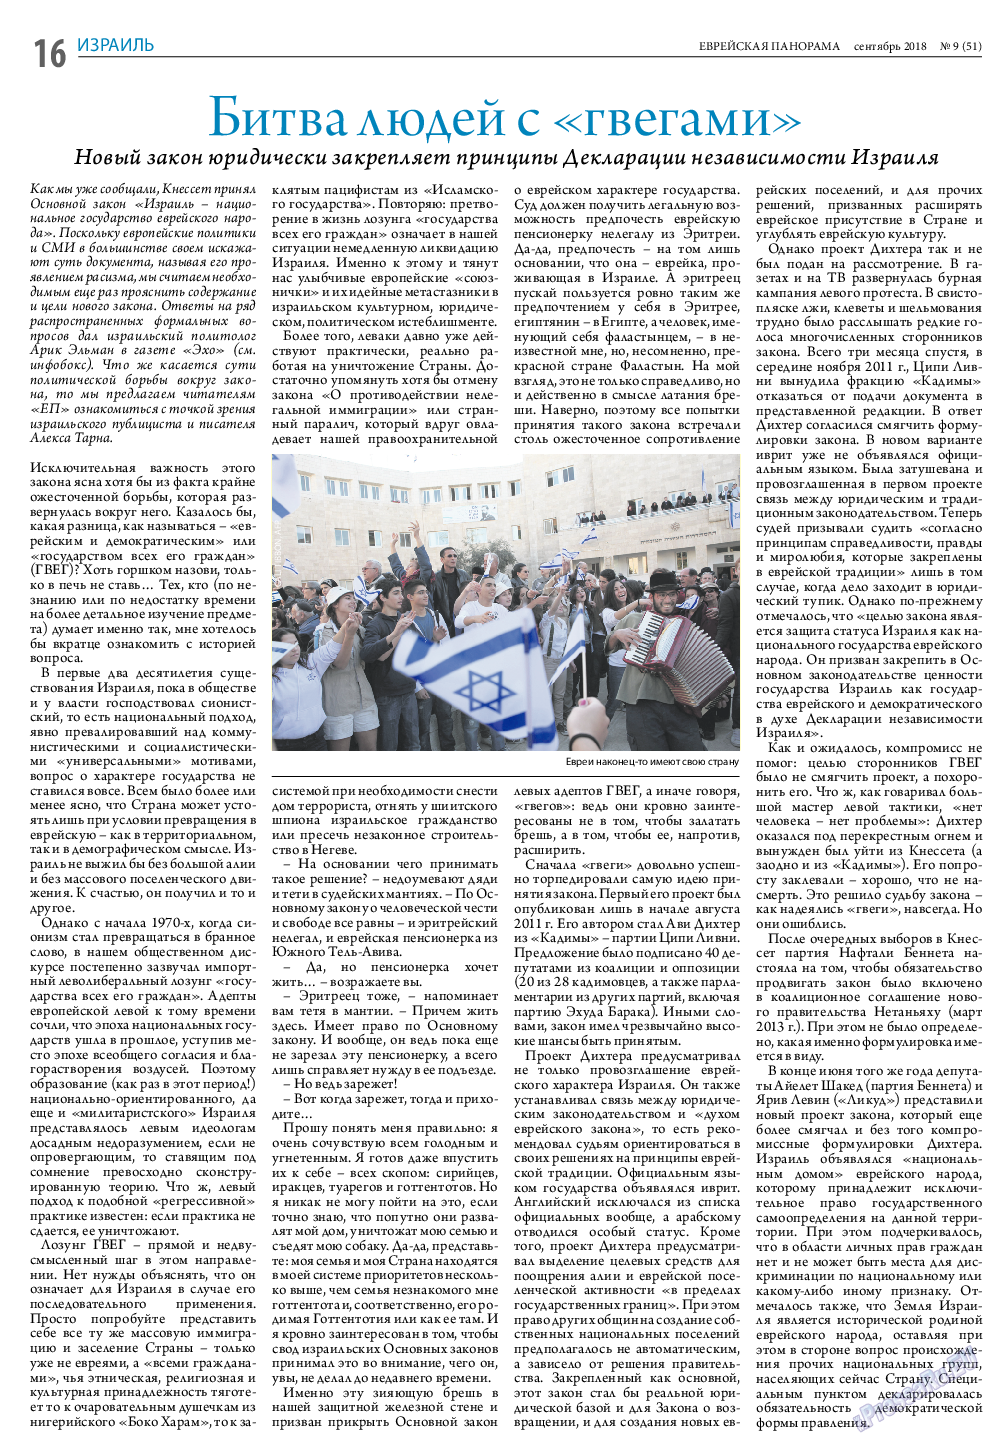 Еврейская панорама, газета. 2018 №9 стр.16